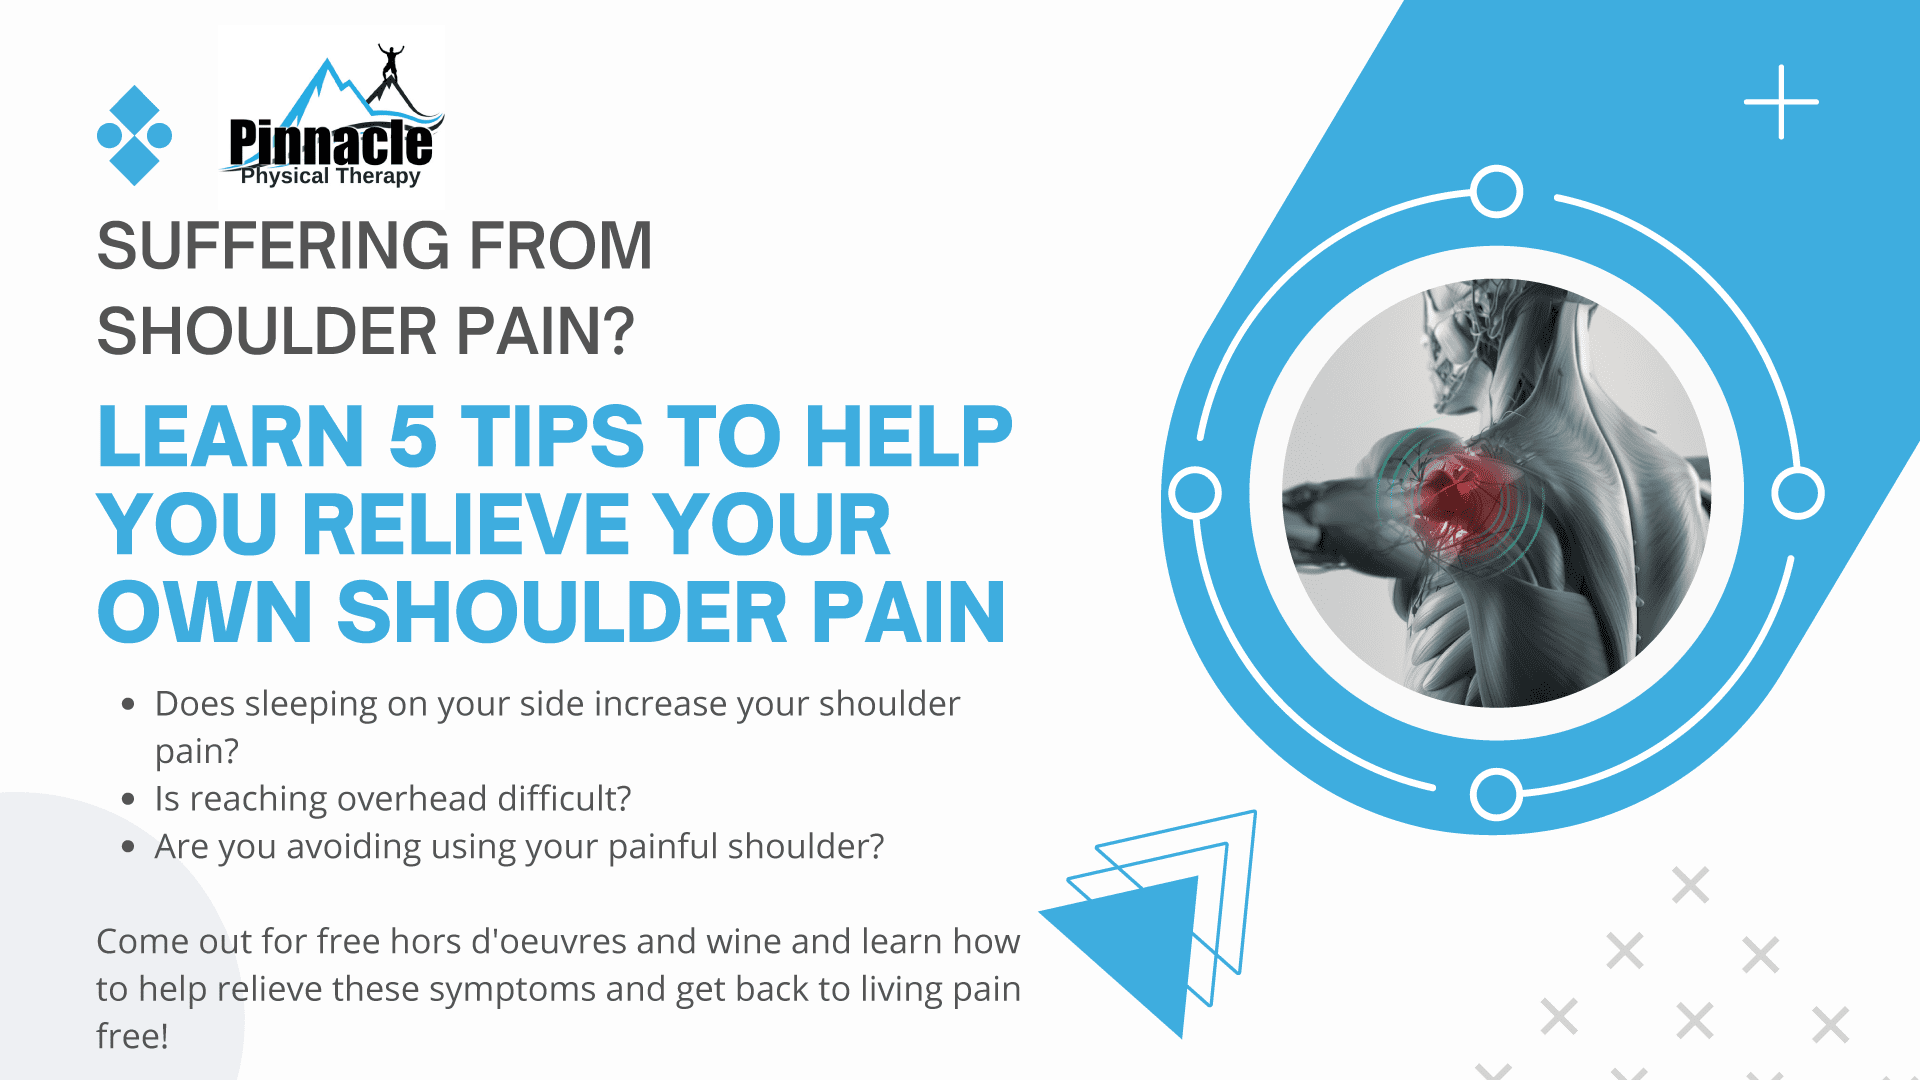 pinnacle physical therapy treats shoulder pain